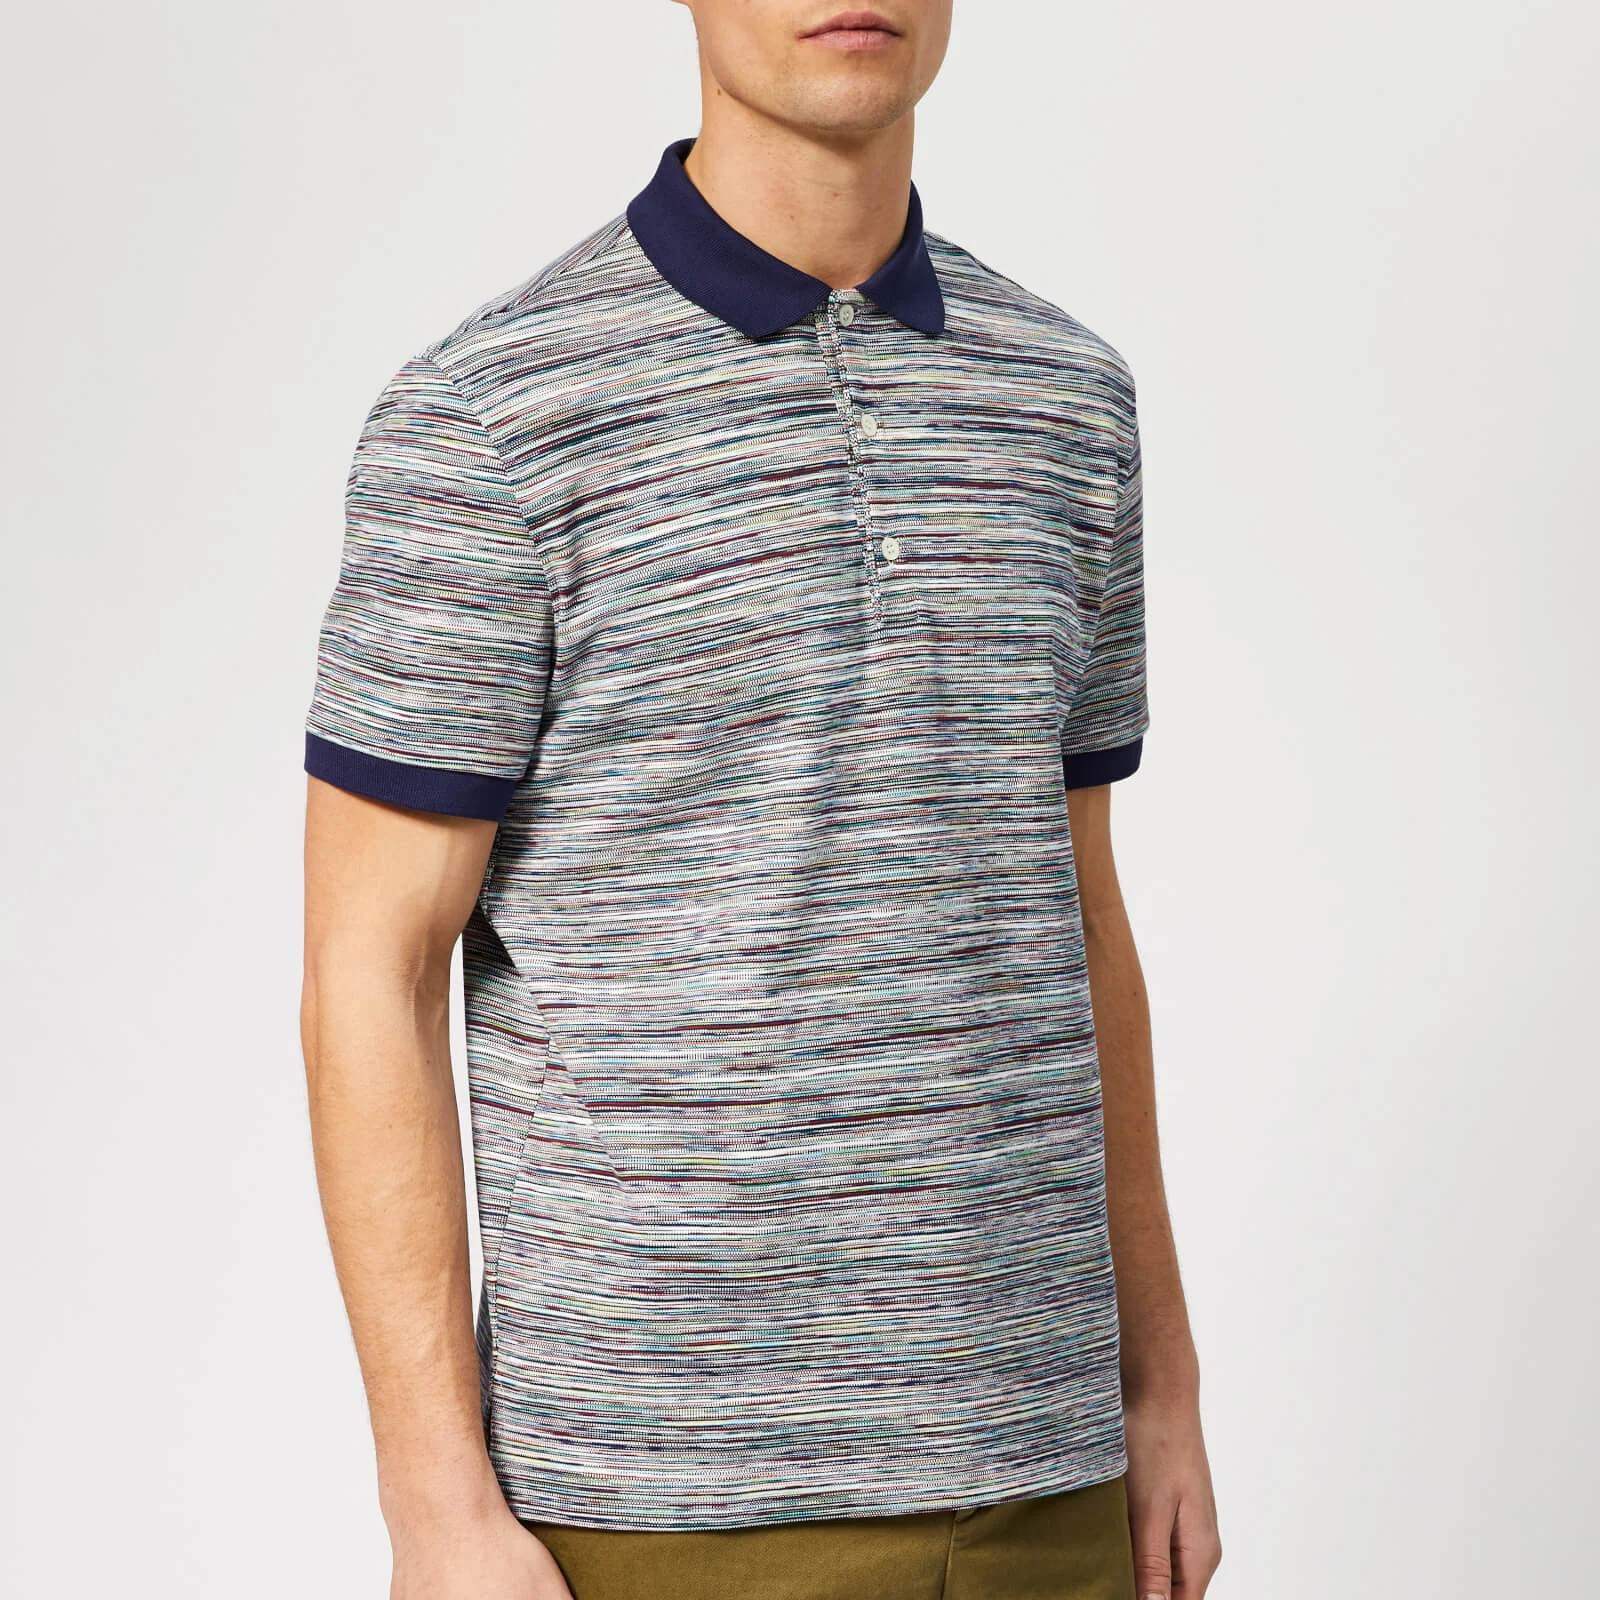 Missoni Men's Pique Stripe Polo Shirt - Blue/Multi Image 1